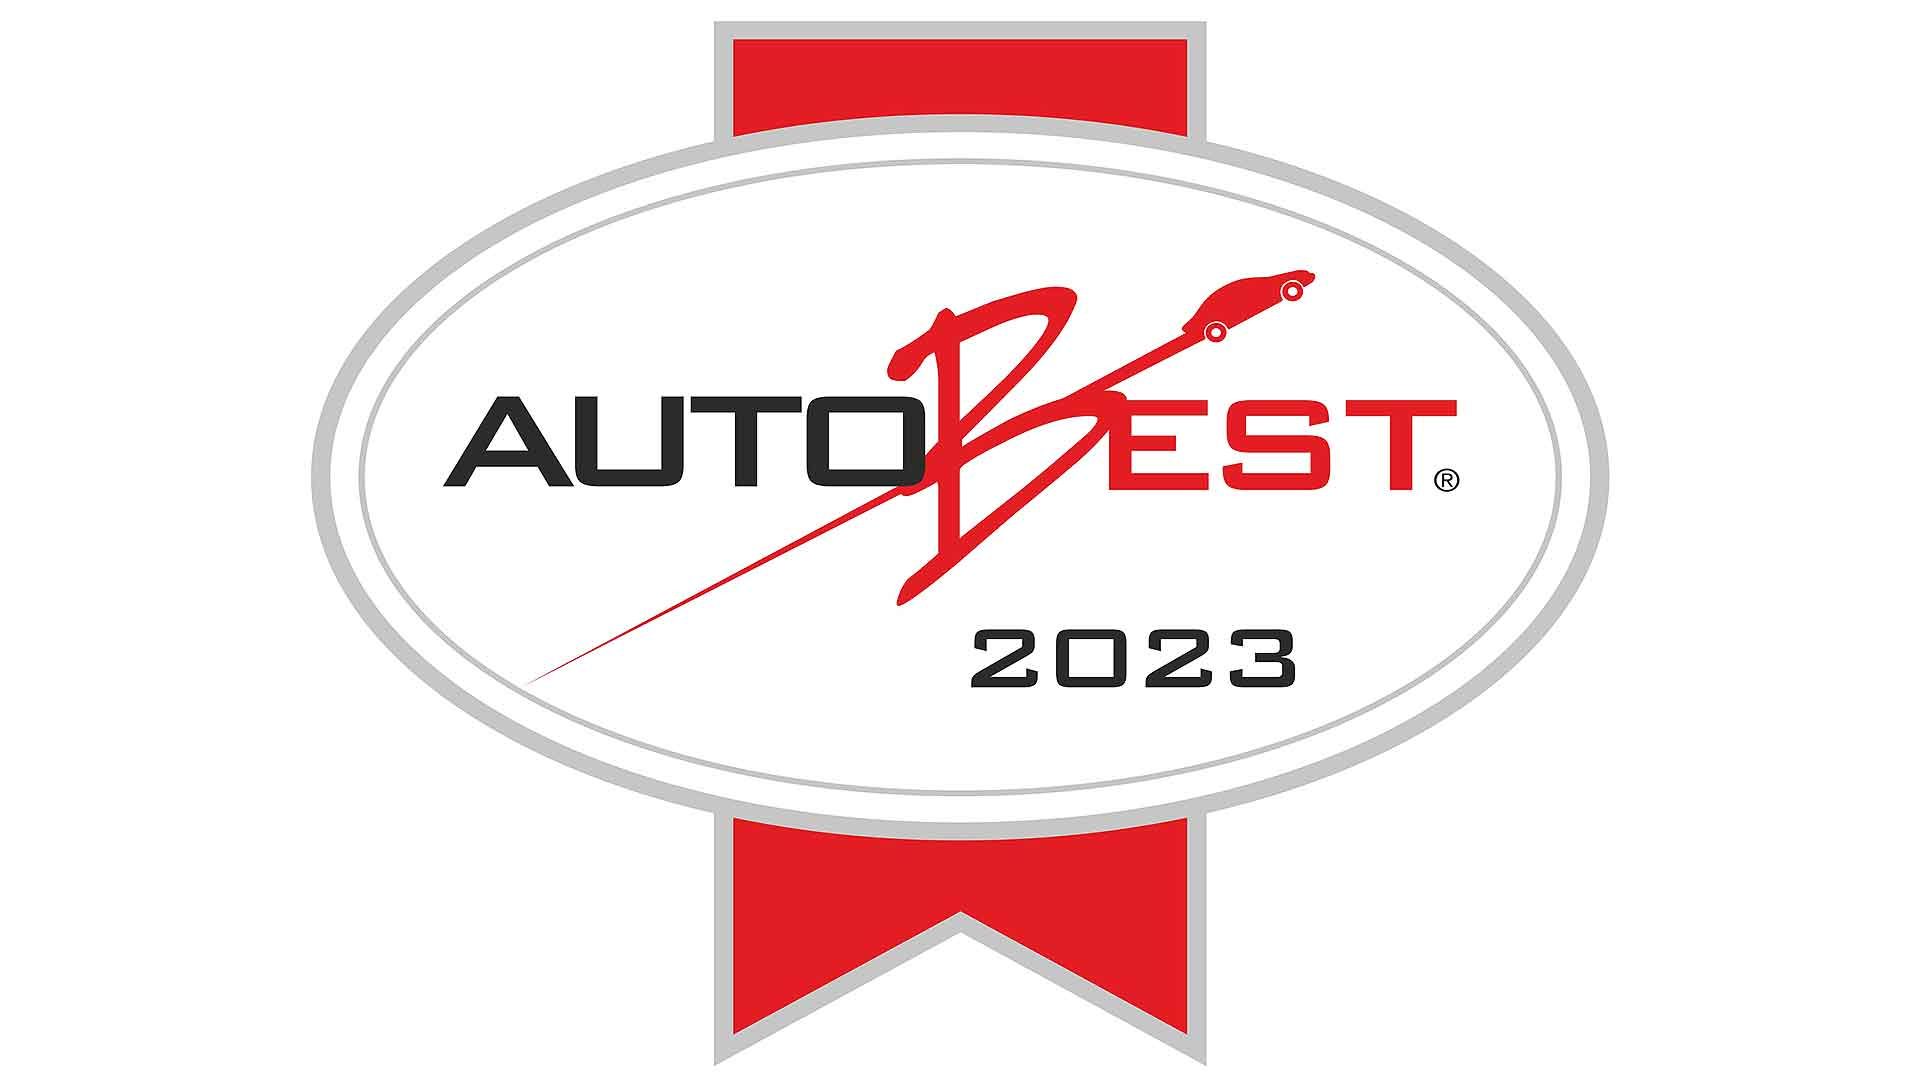 https://www.motoringresearch.com/wp-content/uploads/2022/11/Logo-Autobest-2023-1920x1080.jpg